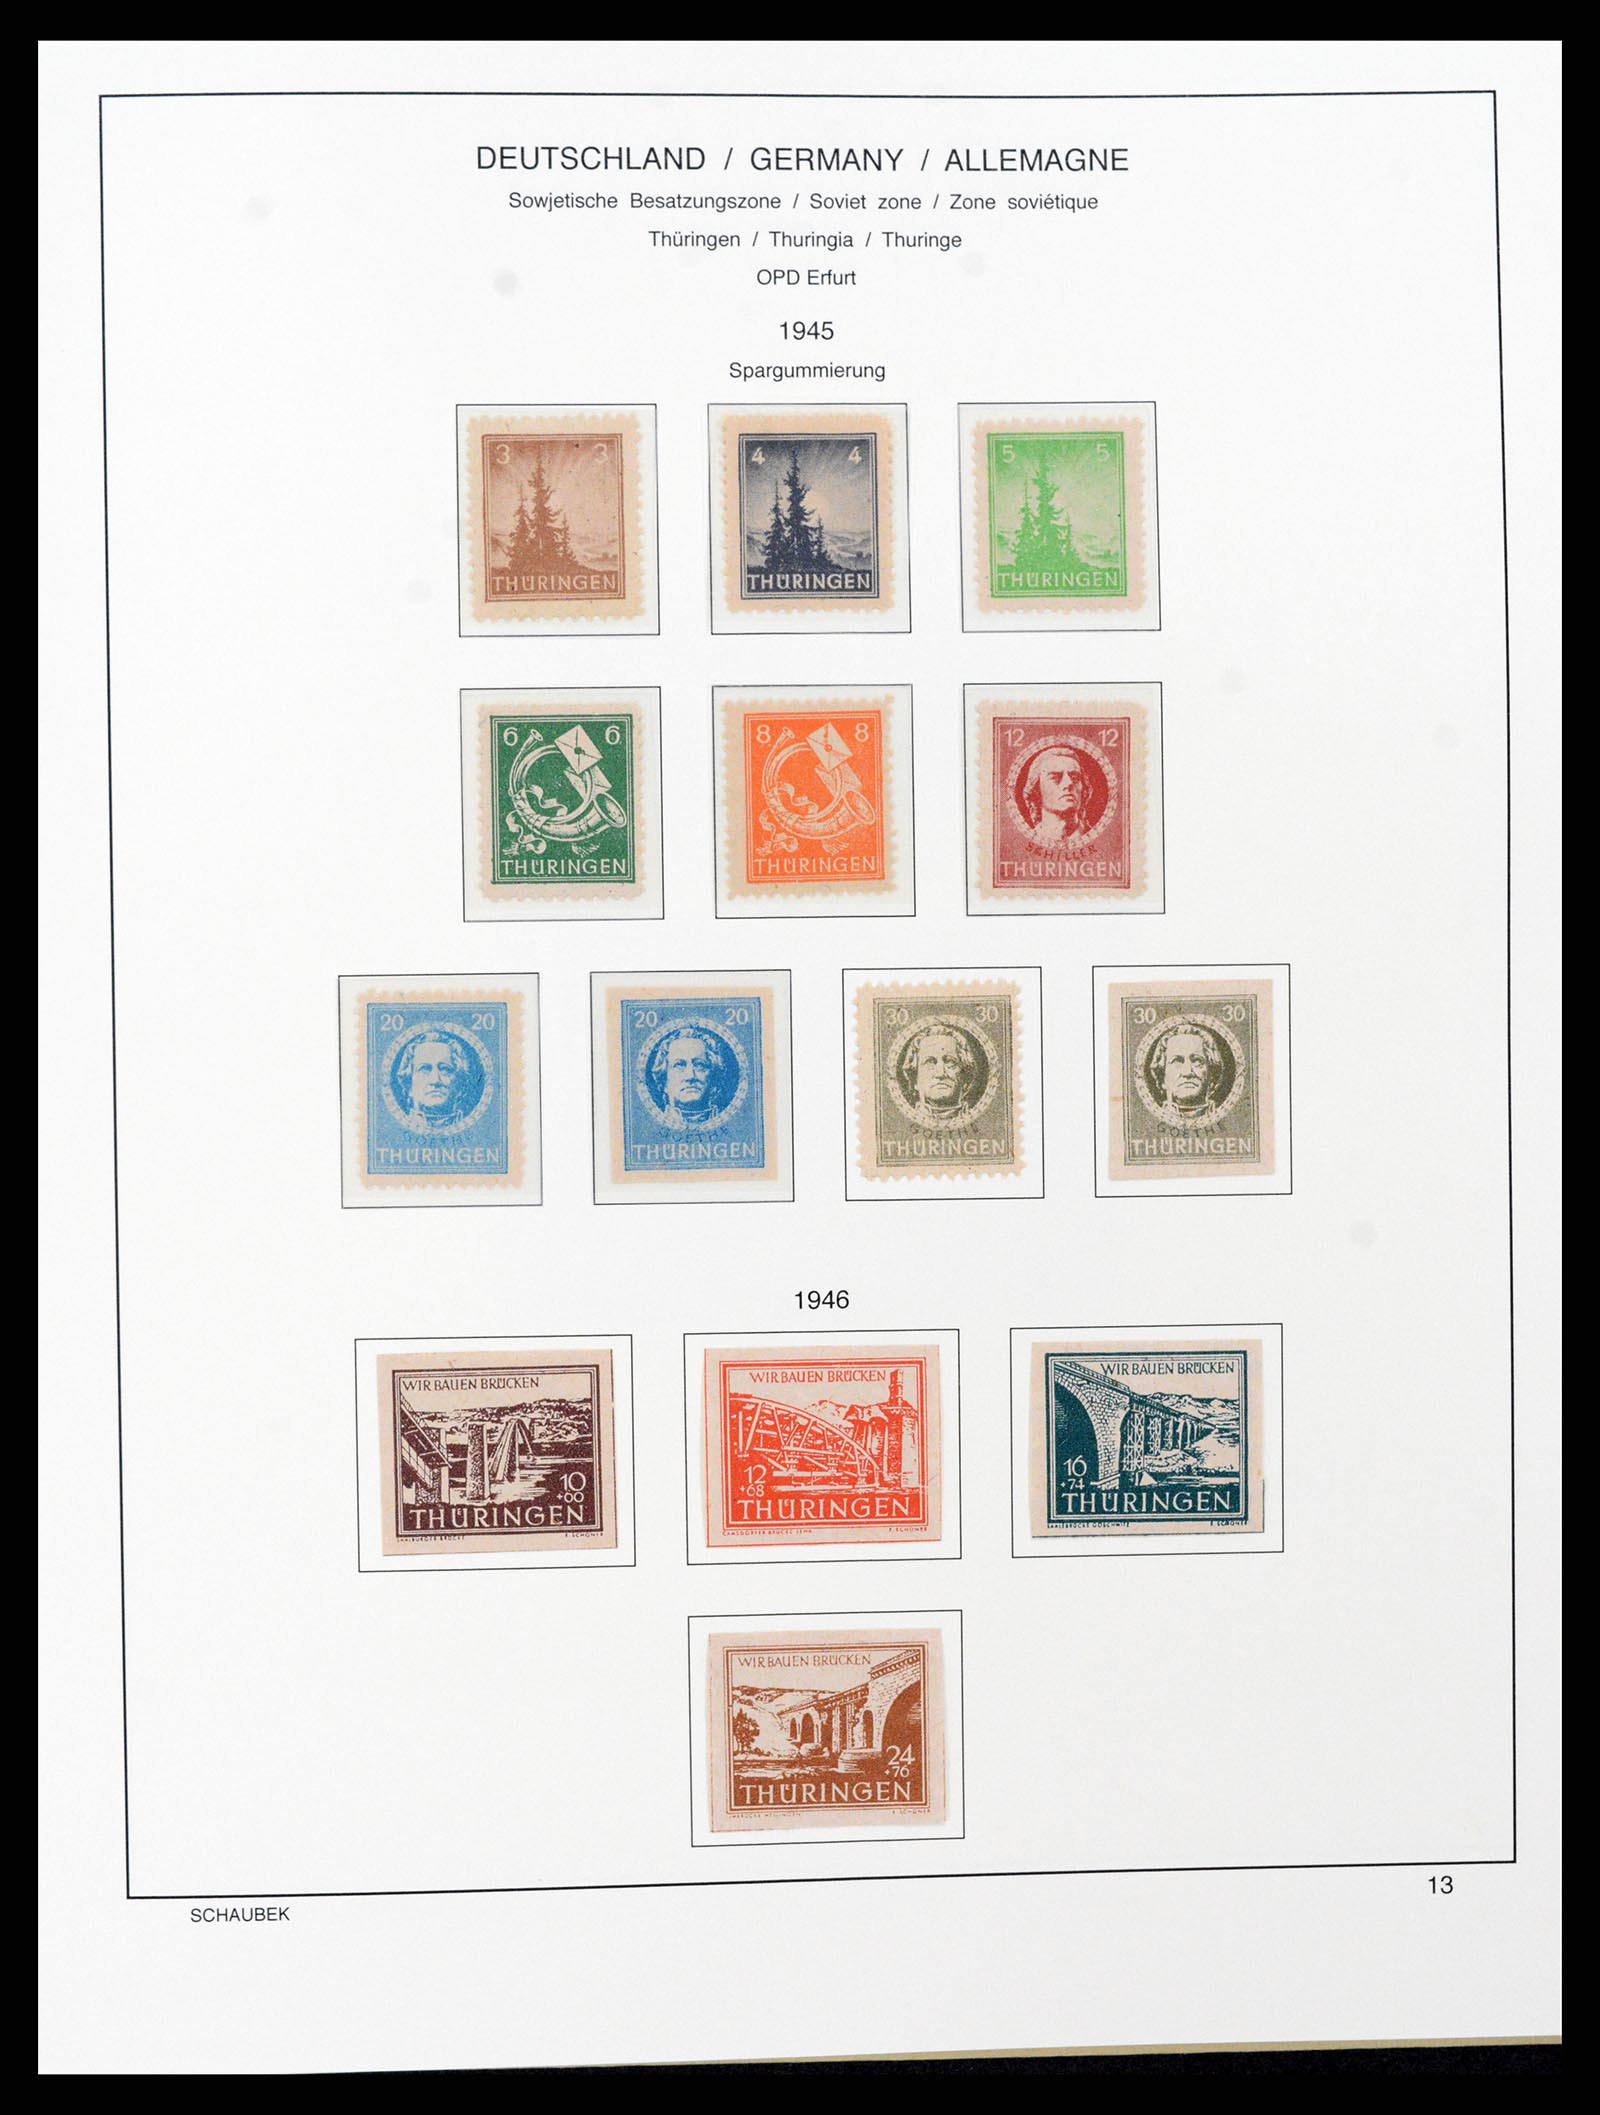 37645 031 - Stamp collection 37645 German Zones 1945-1949.